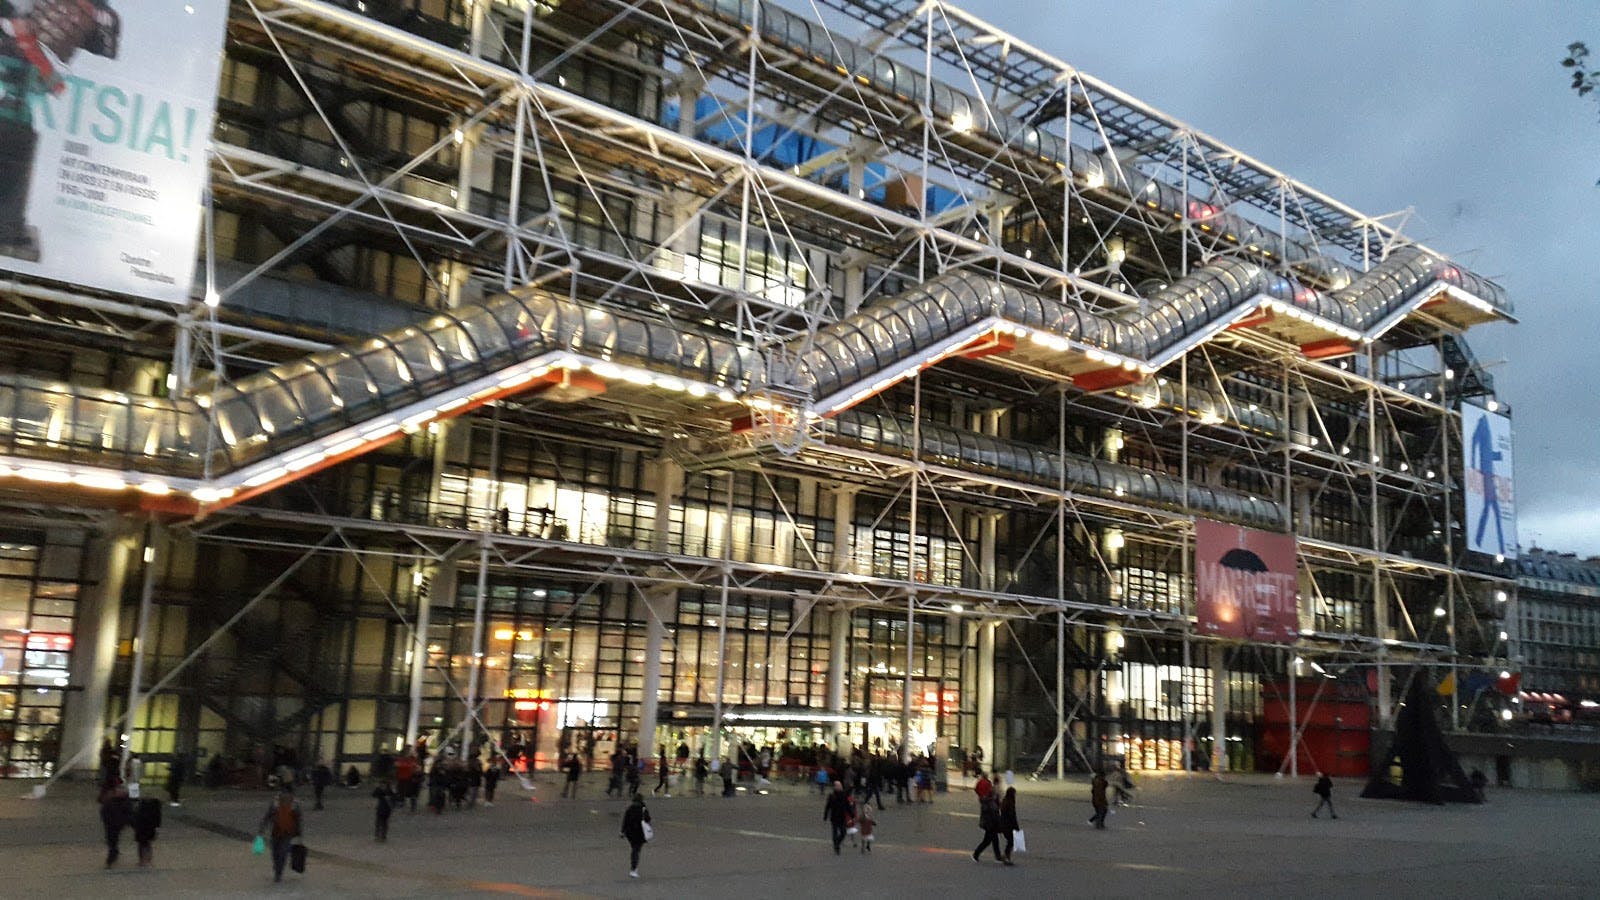 Image - The Centre Pompidou